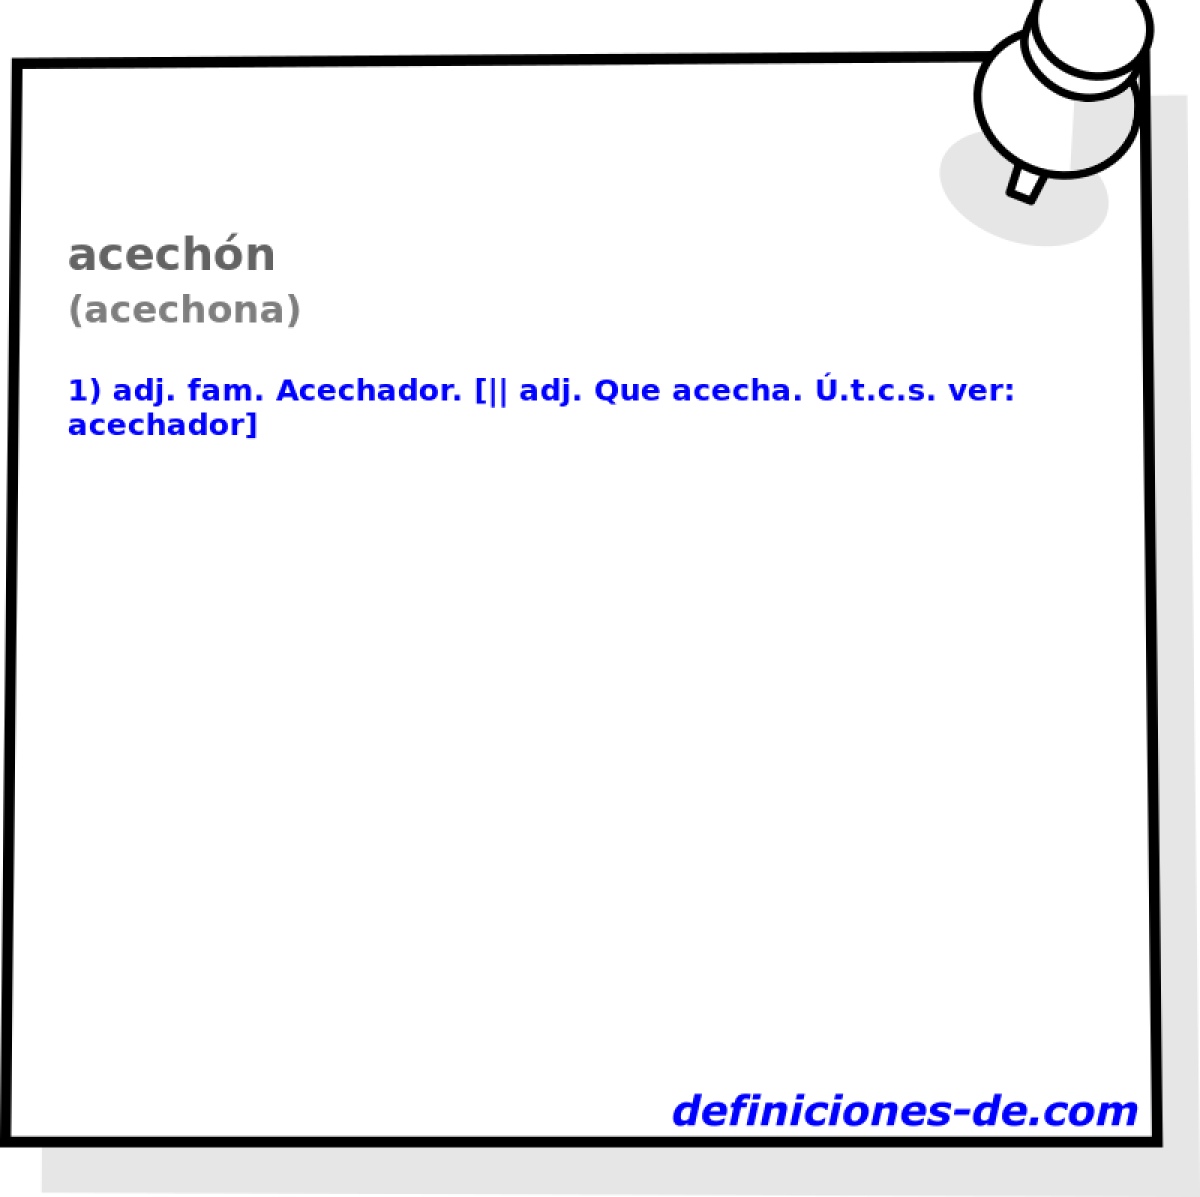 acechn (acechona)